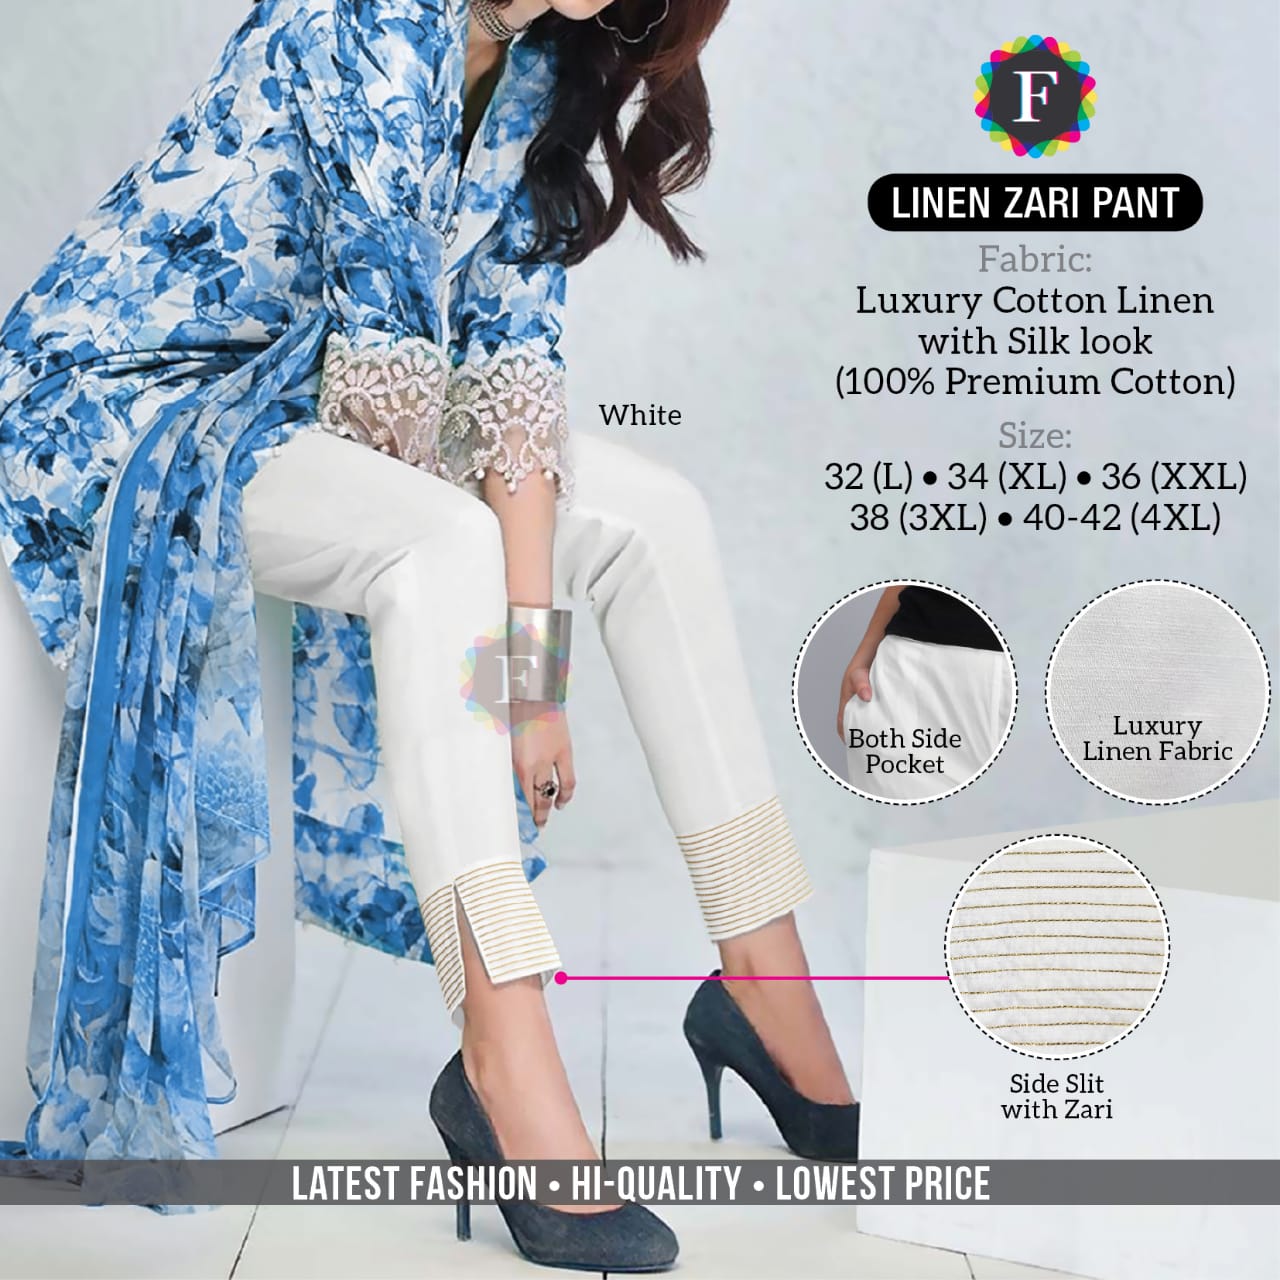 Linen Zari Pant Cotton Linen With Silk Look Bottom Wear Ladies Pant